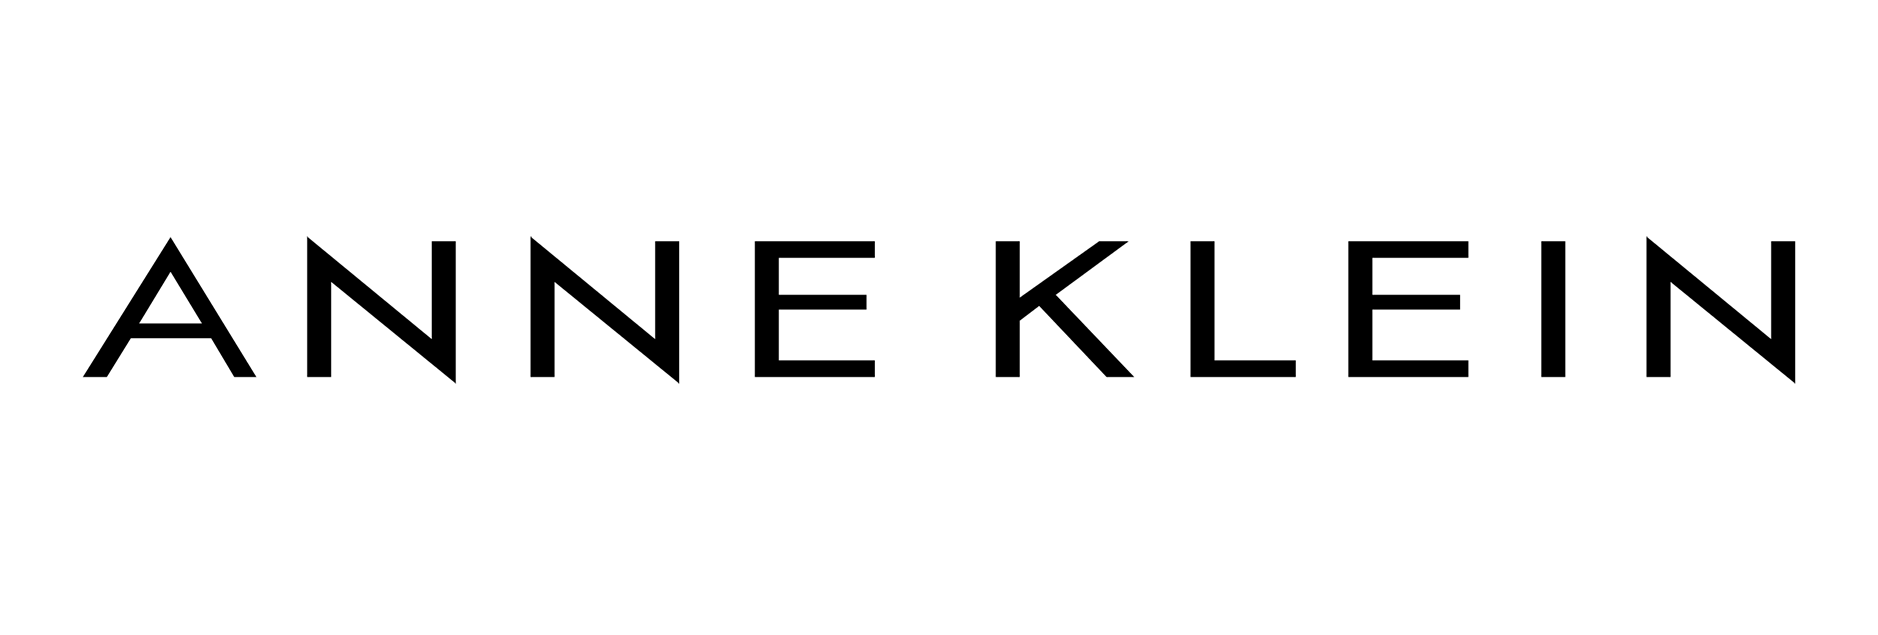 anne-klein-1-logo-png-transparent1